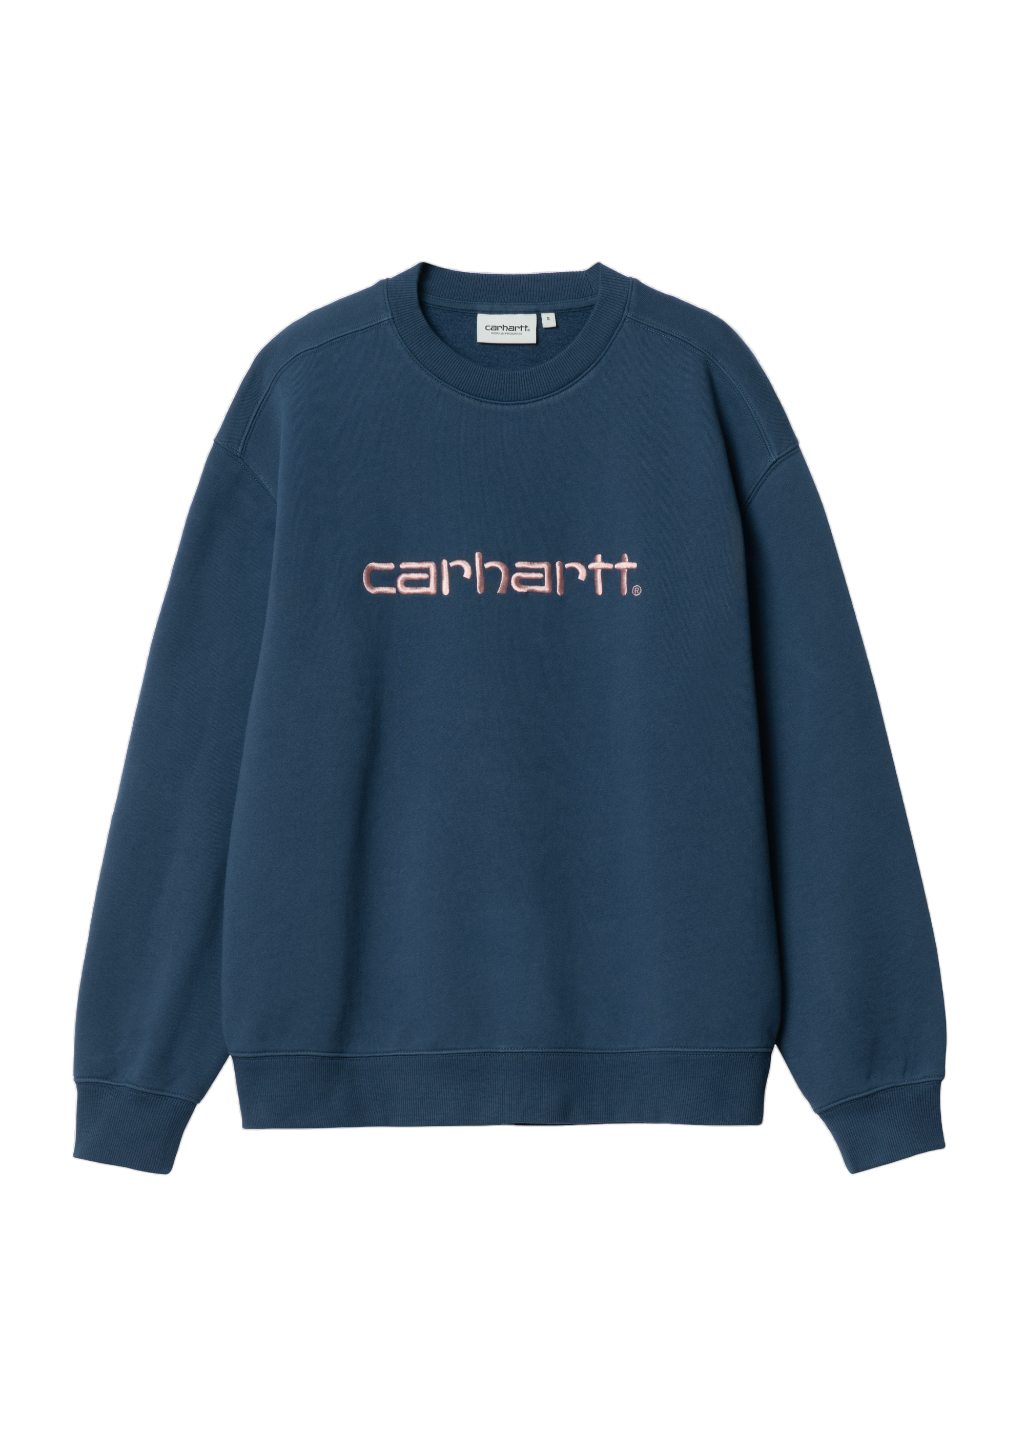 Carhartt WIP - W' Carhartt Sweatshirt - Squid/Glassy Pink - Hardpressed Print Studio Inc.